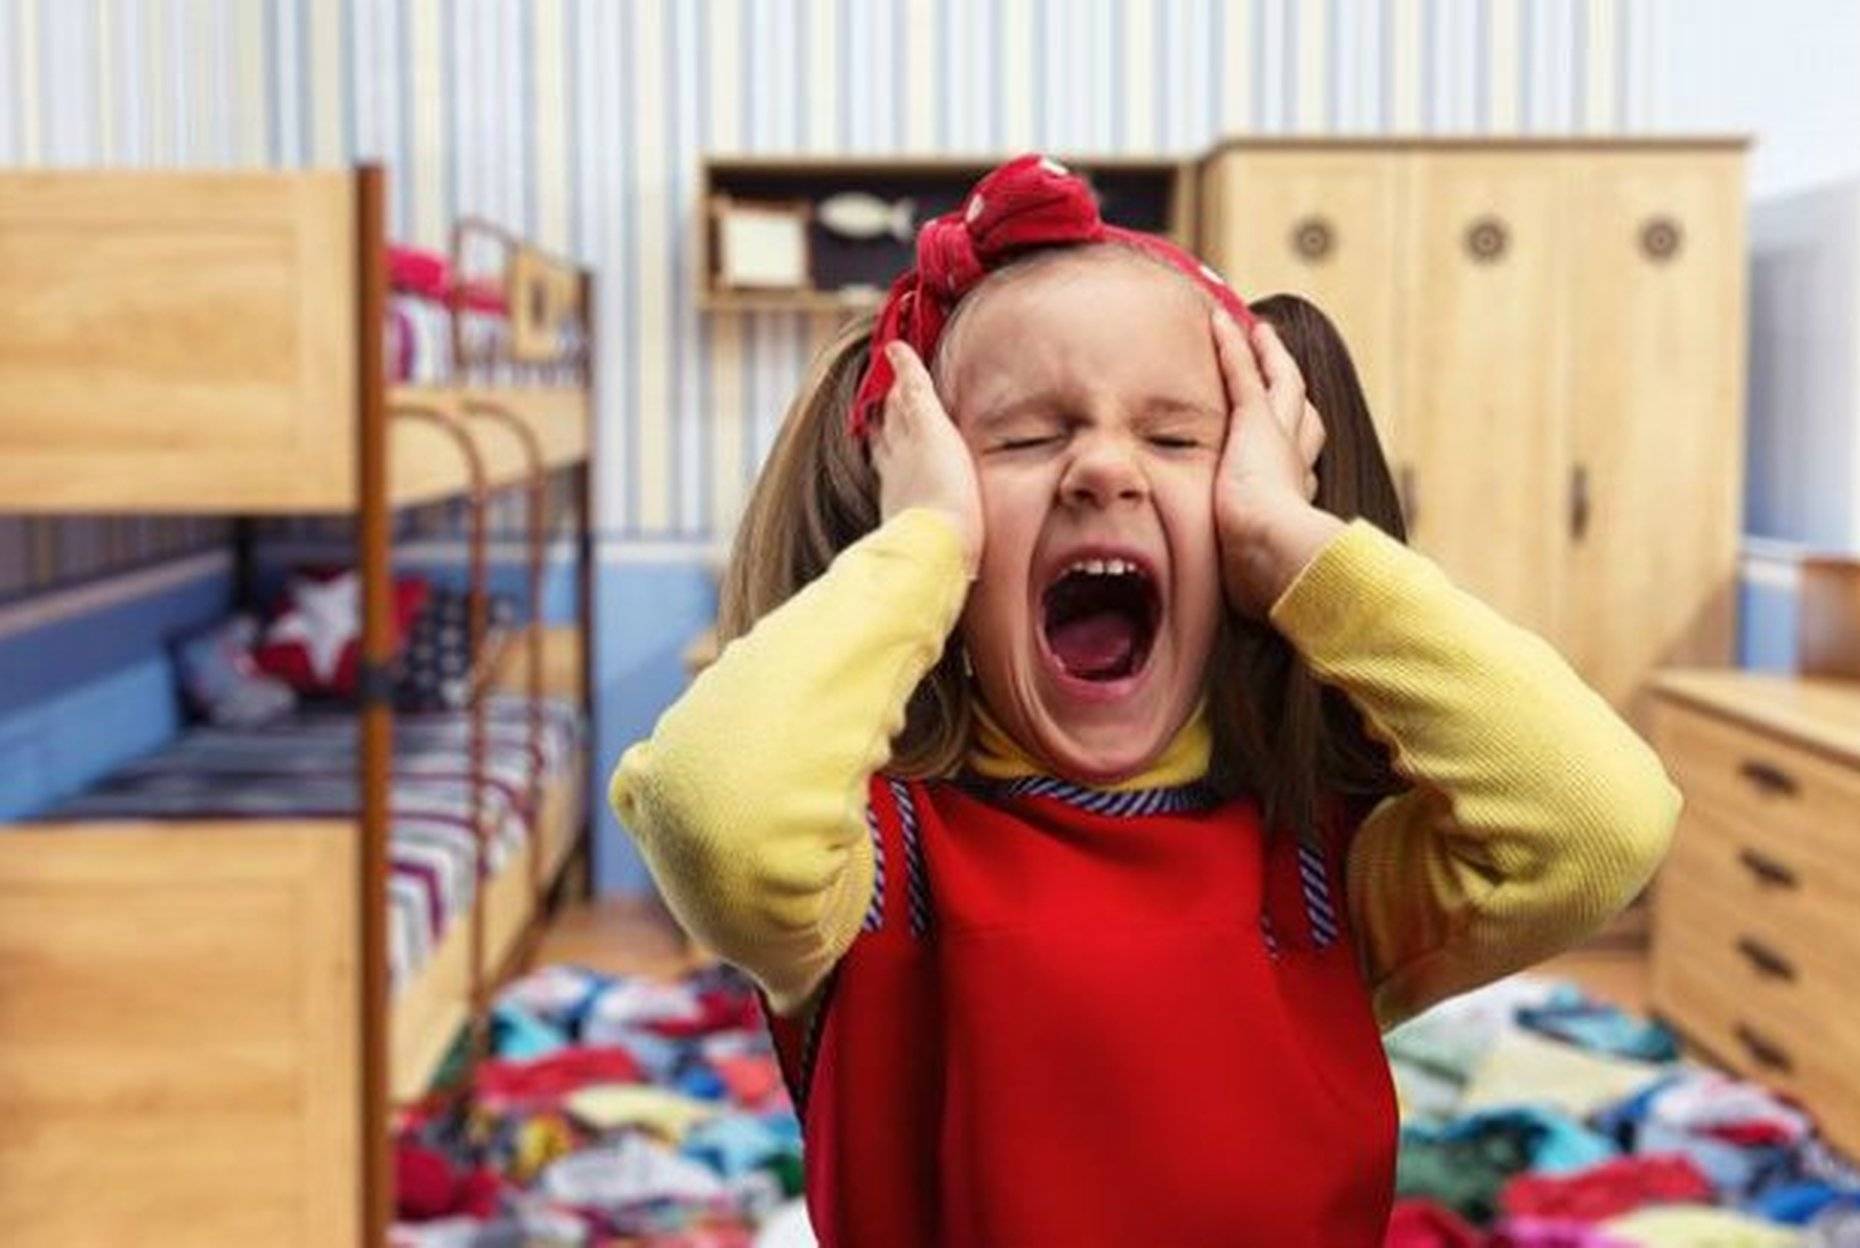 Истерика (истерический невроз) у ребенка: по любому поводу, советы психолога, после сна